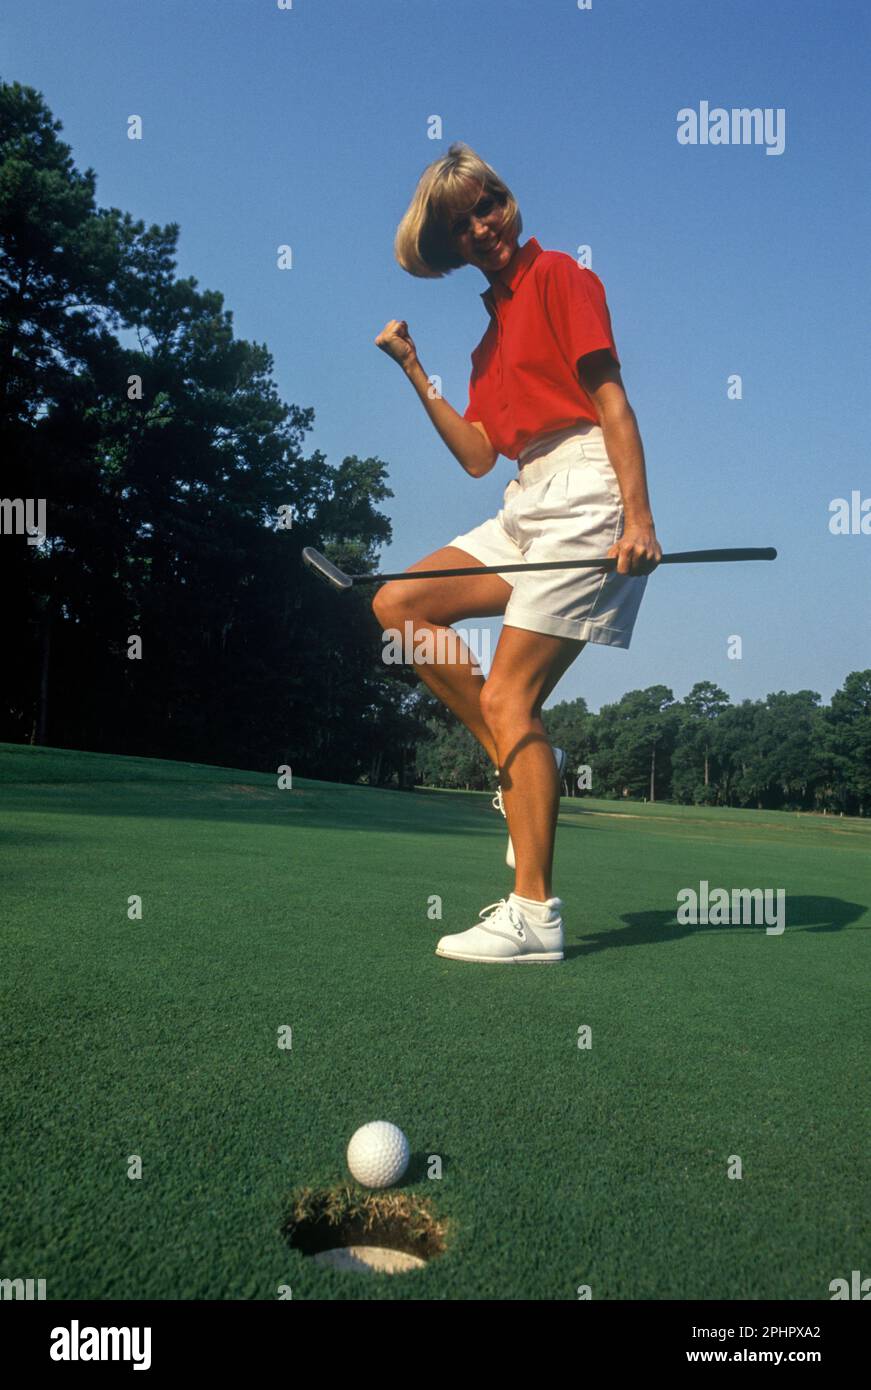 1990 Donna storico golfista dal foro sul putting green Foto Stock